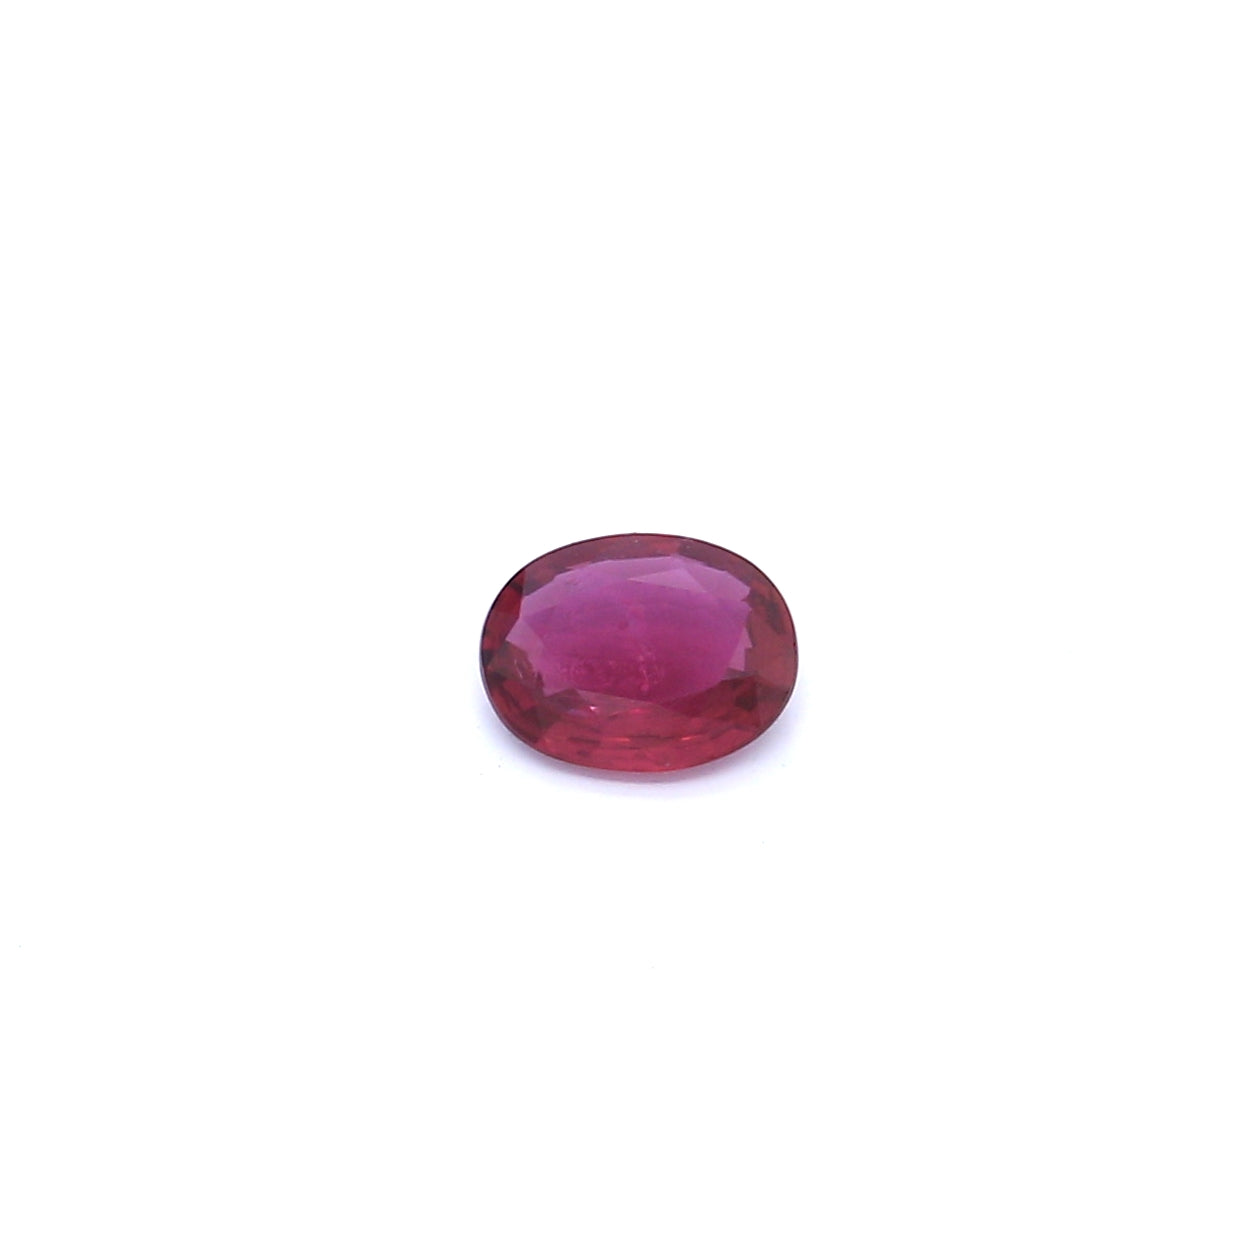 0.38ct Purplish Red, Oval Ruby, H(a), Thailand - 5.44 x 4.33 x 1.72mm